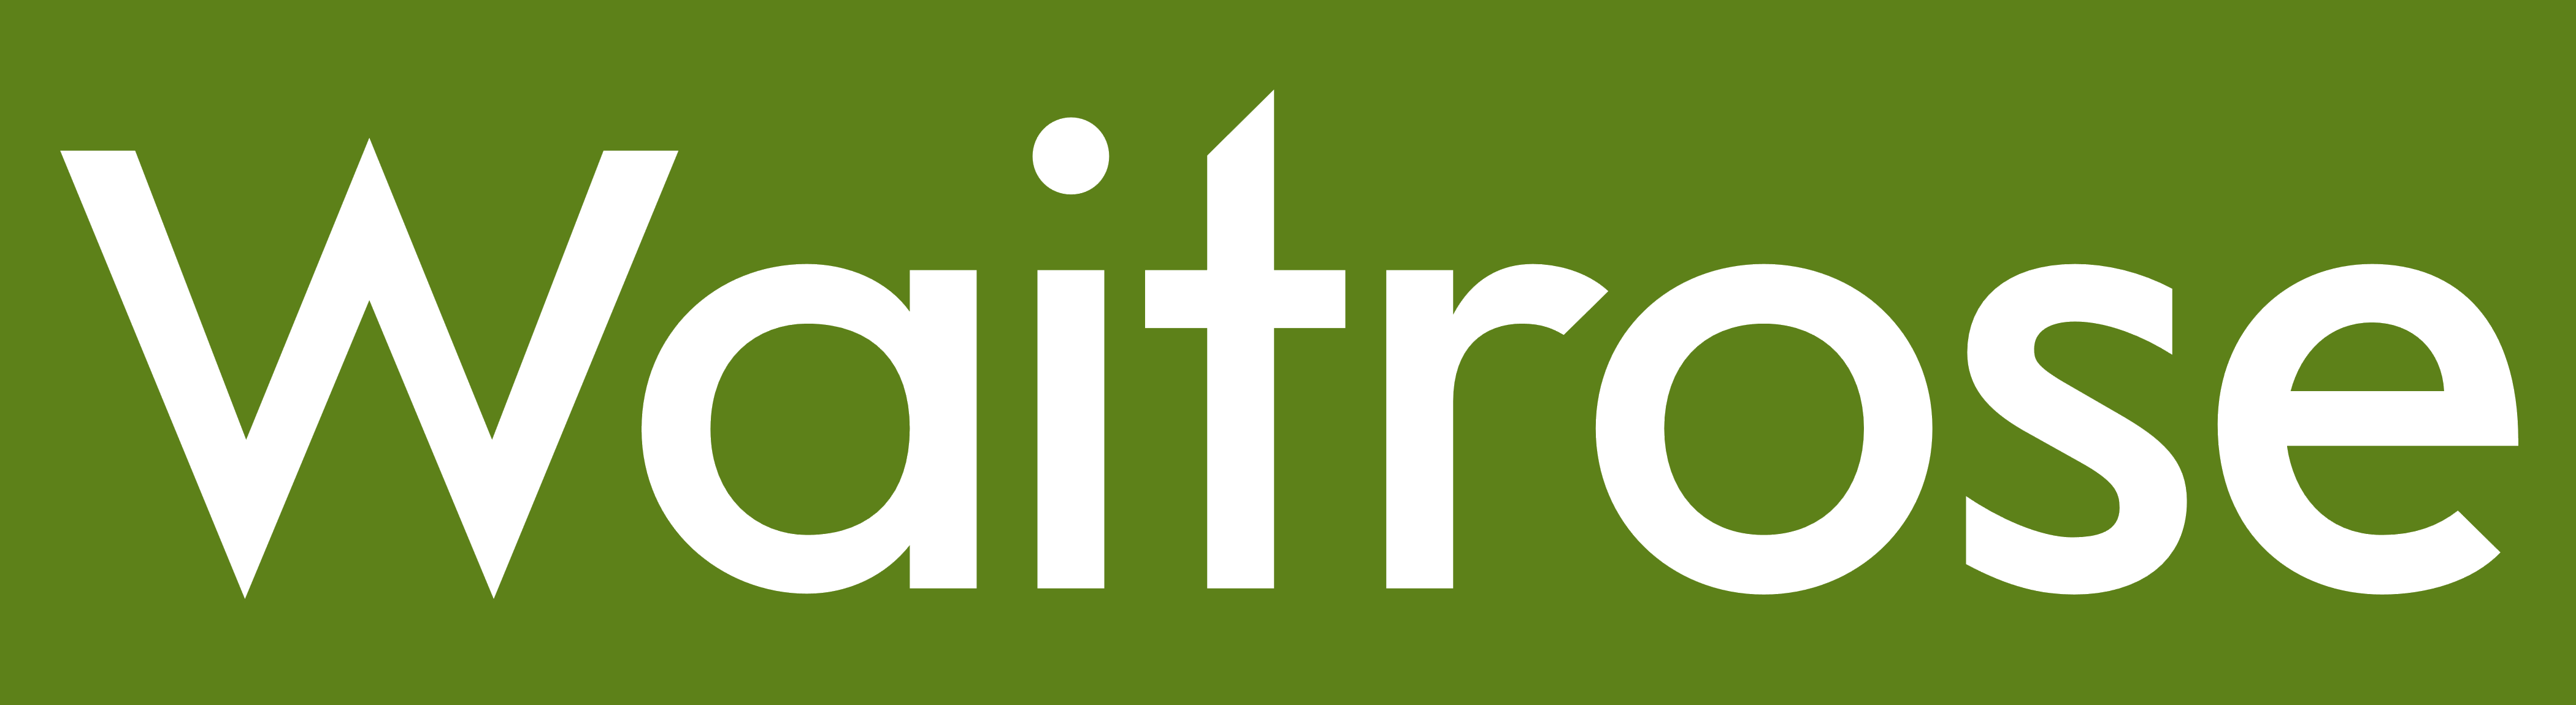 Waitrose Logo - Waitrose